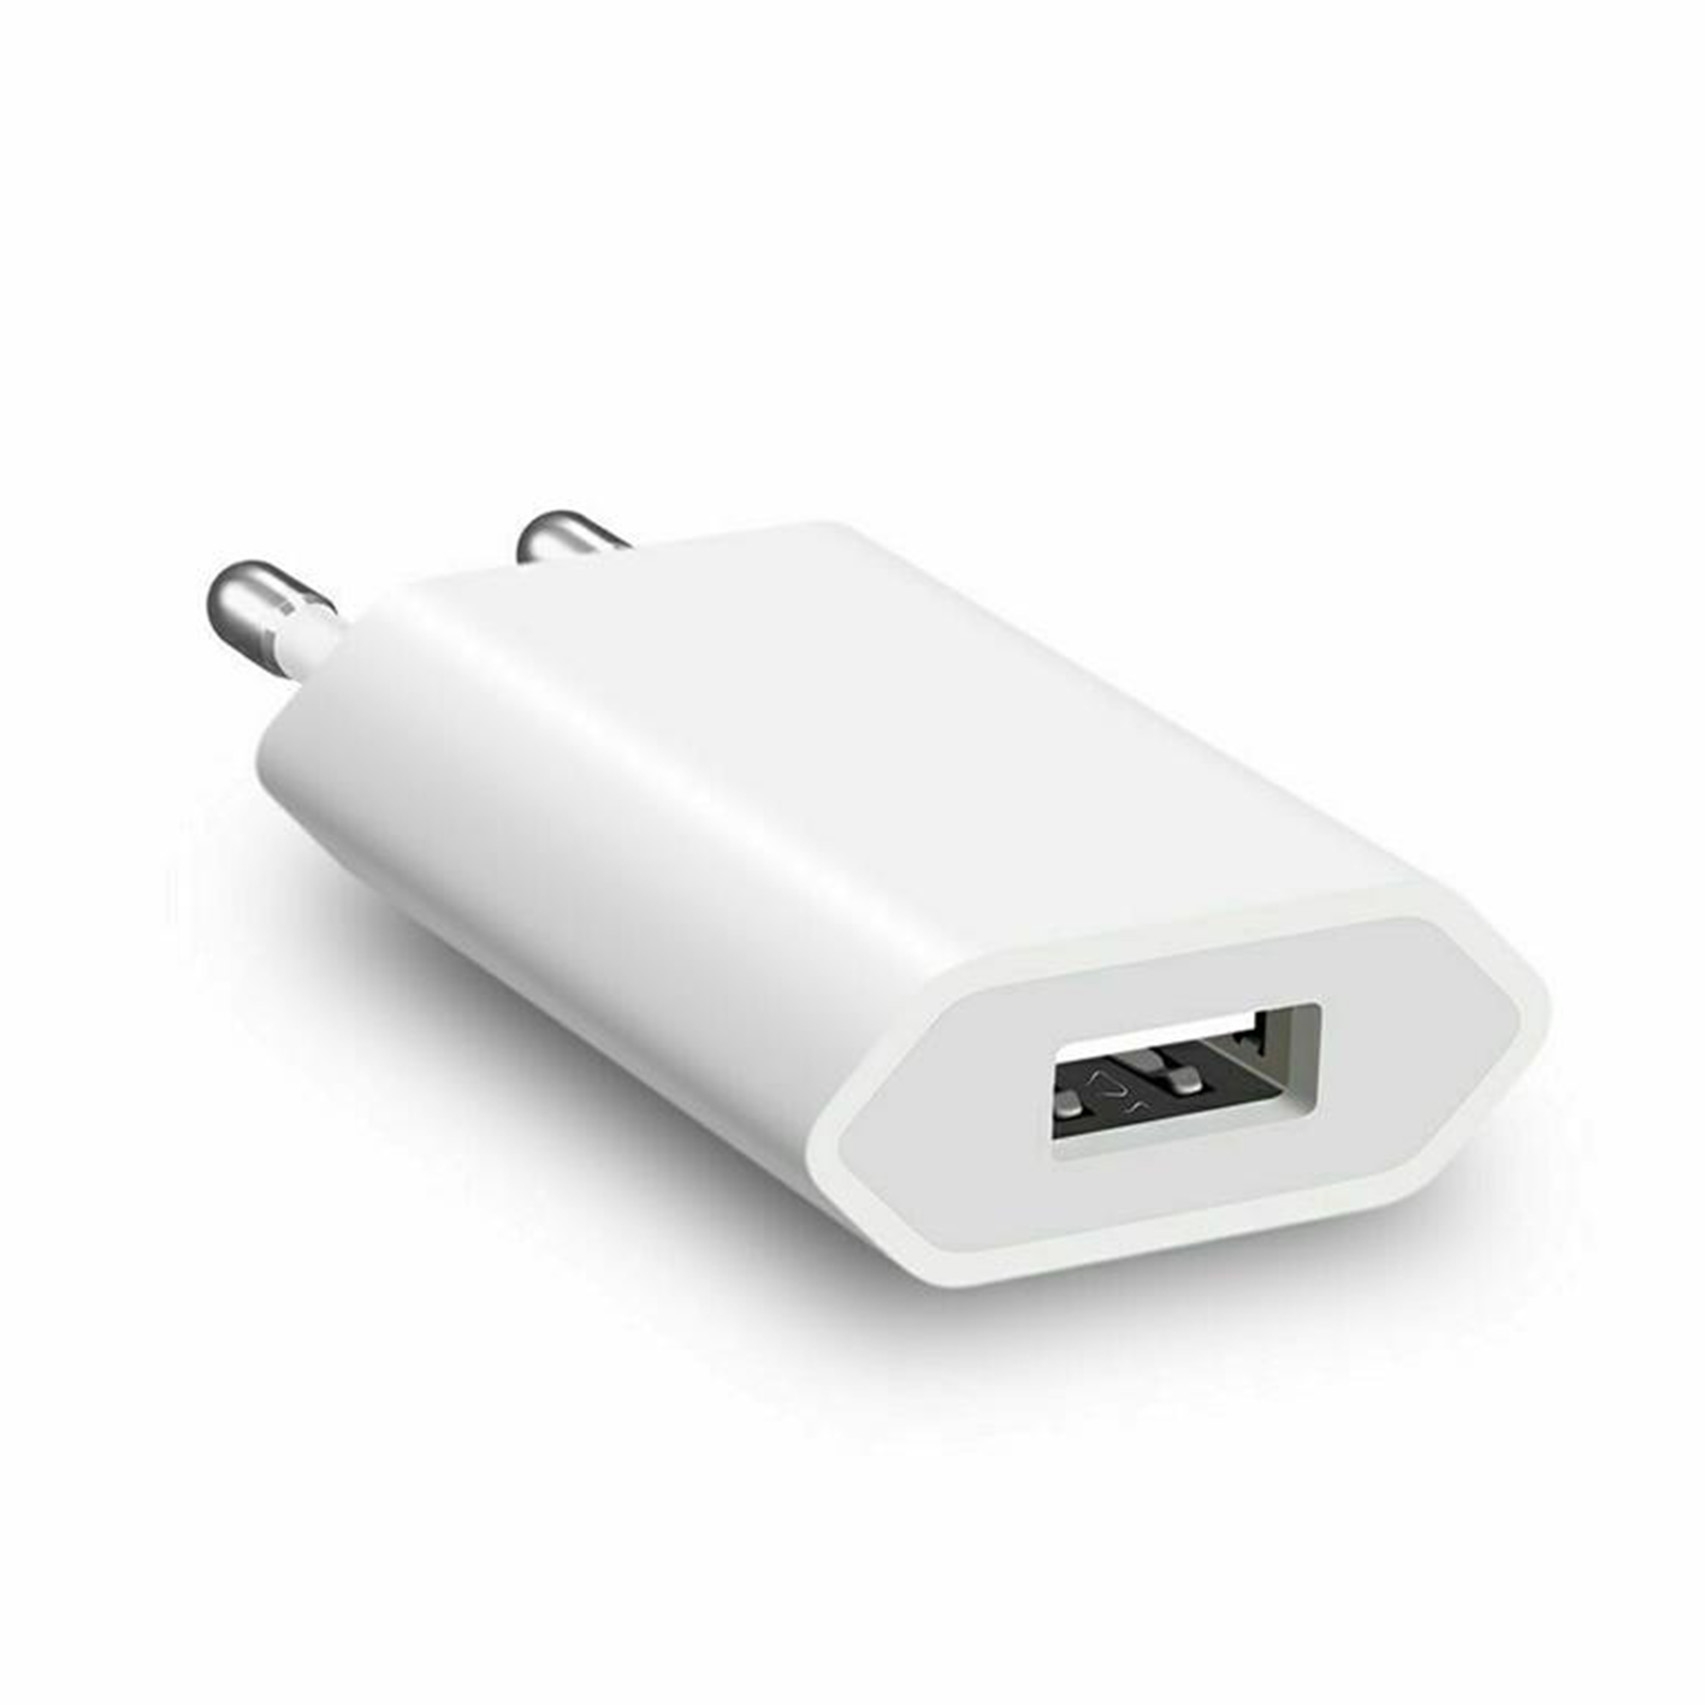 iPhone 7 5W USB Power Adapter